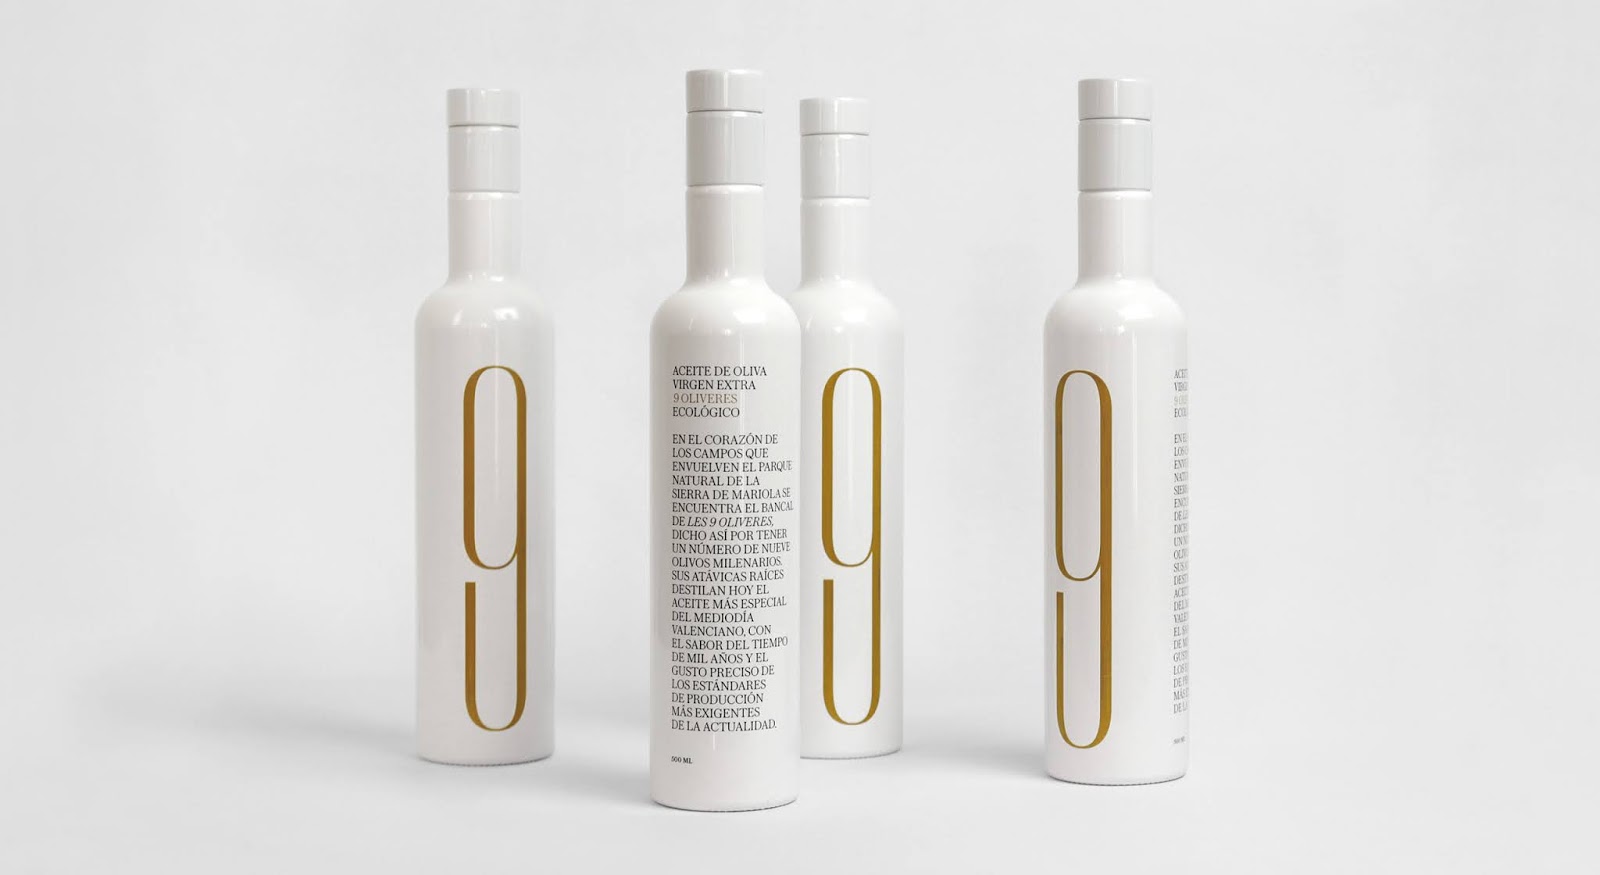 9 Oliveres橄榄油包装设计